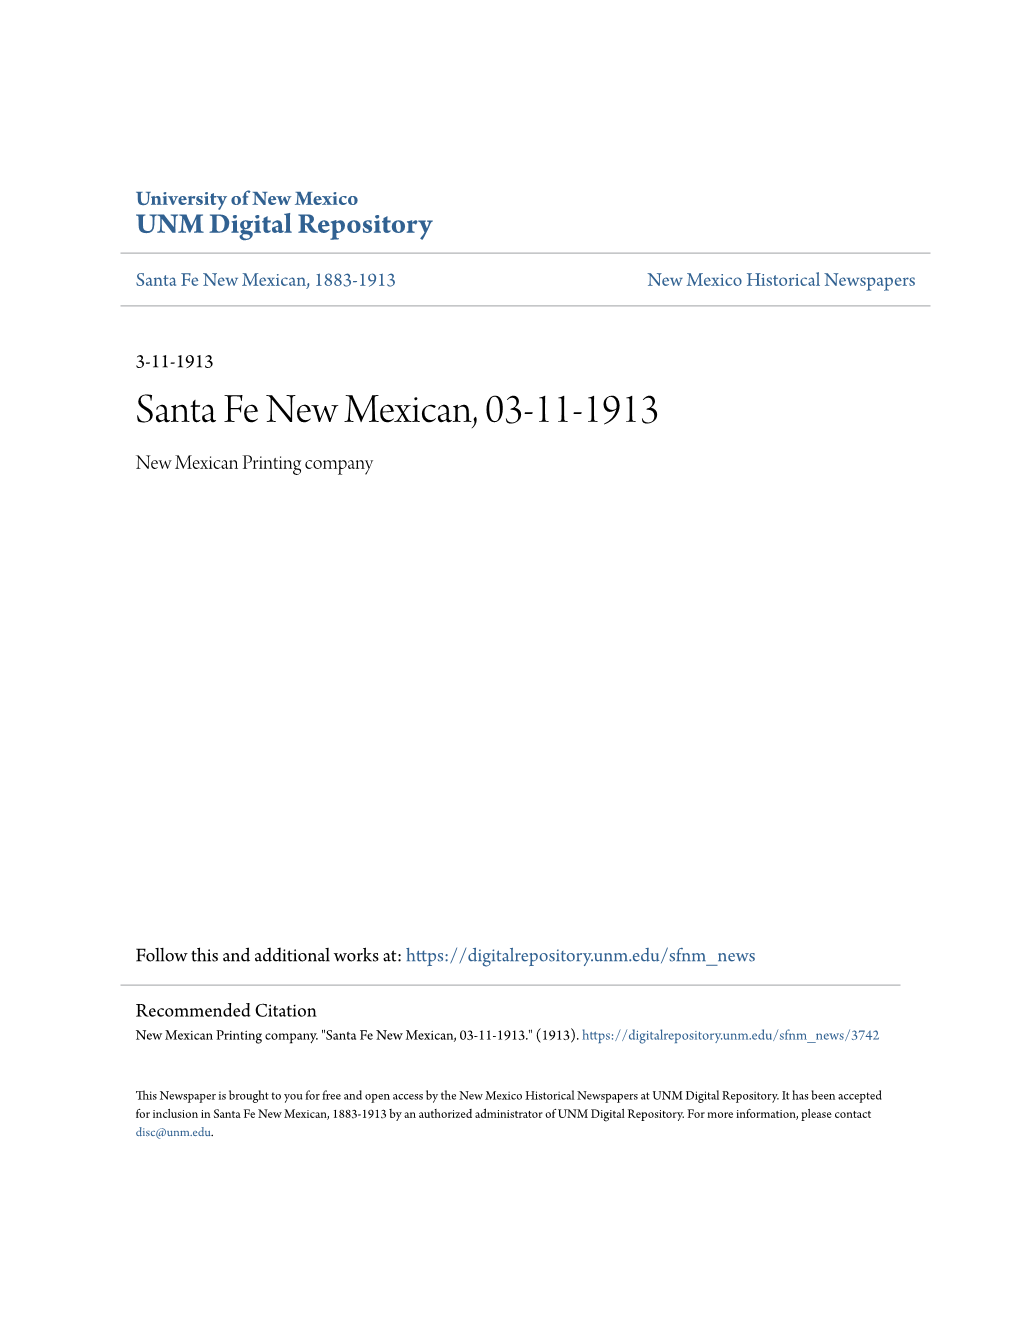 Santa Fe New Mexican, 03-11-1913 New Mexican Printing Company